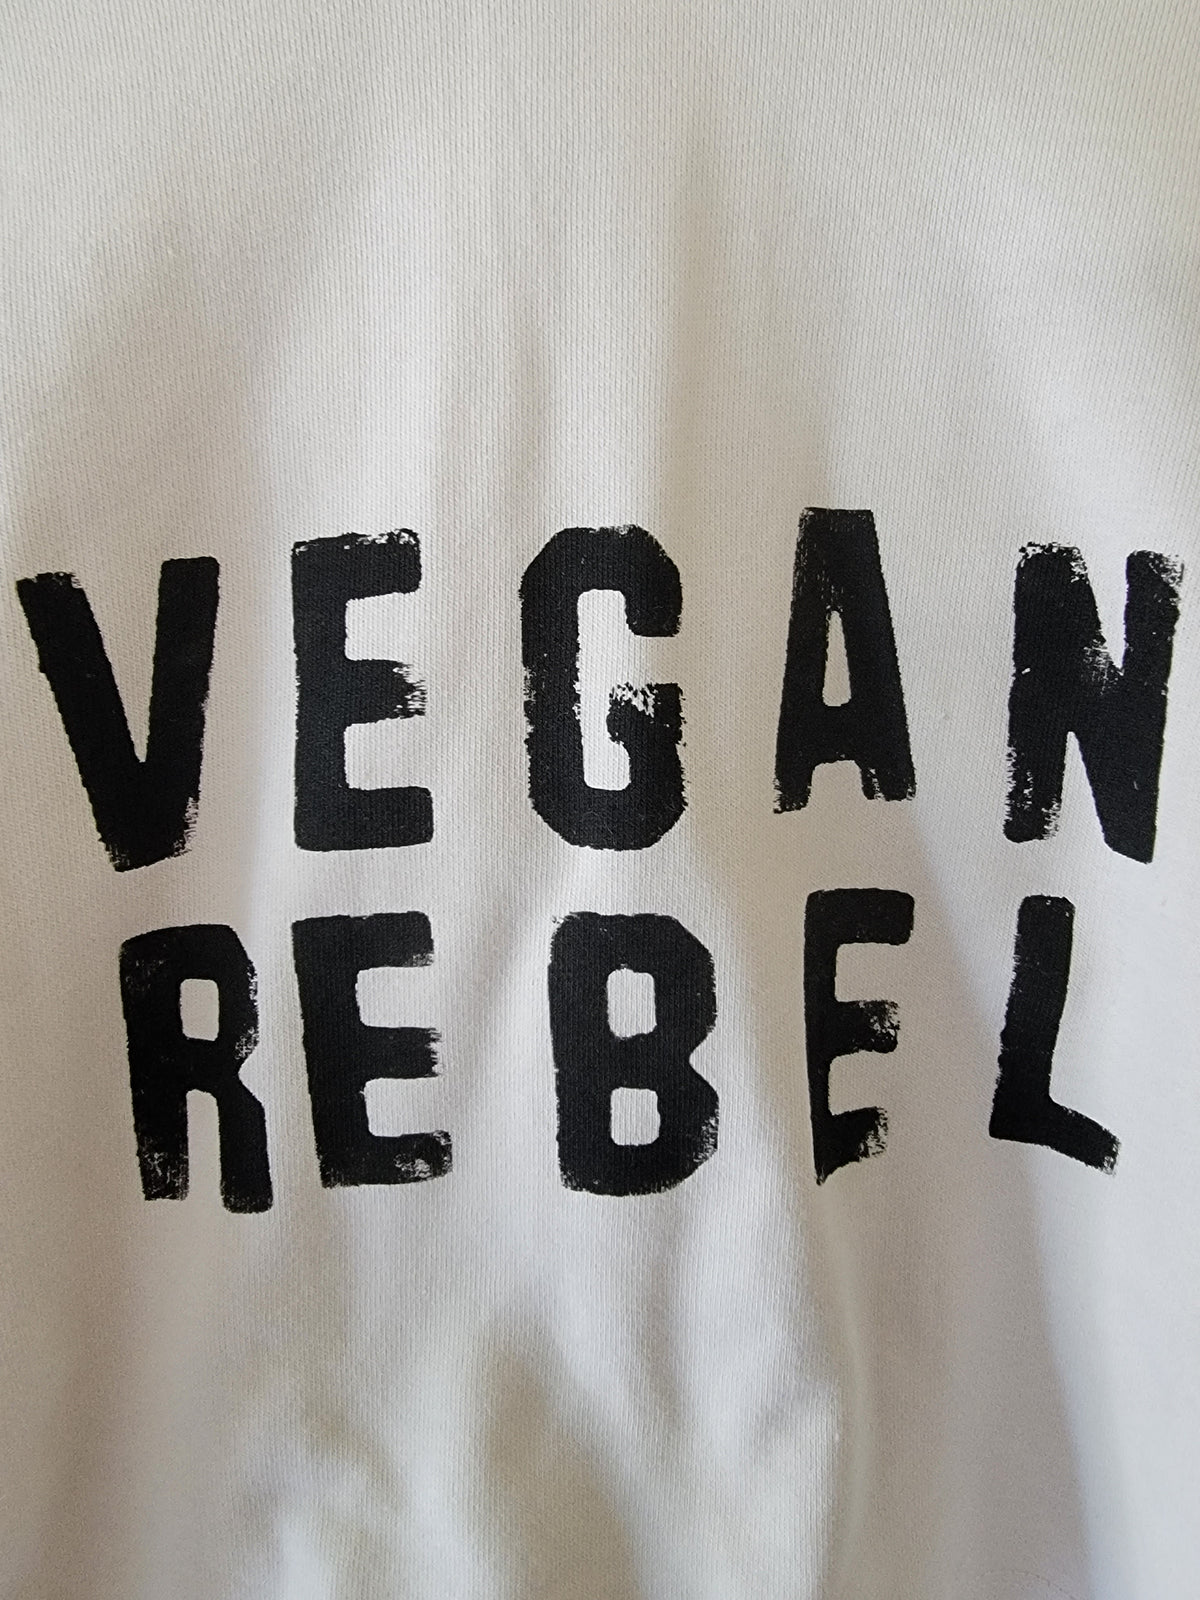 Short Waist Sweater Vegan Rebel